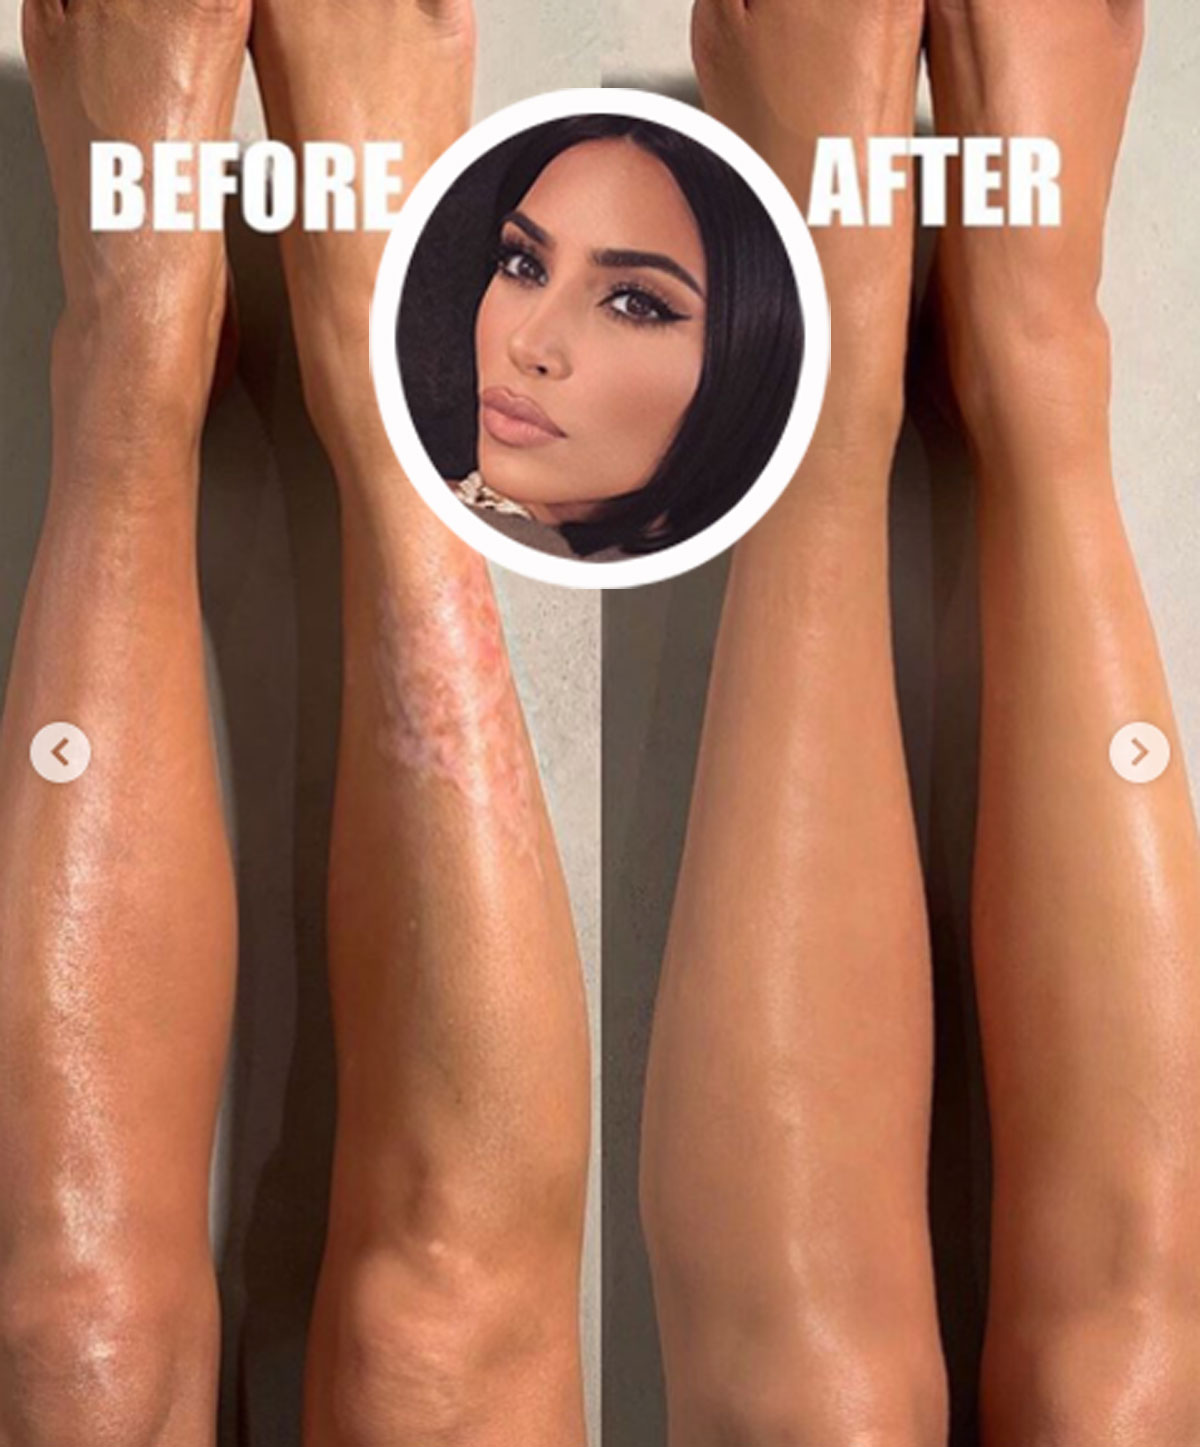 https://perezhilton.com/wp-content/uploads/2019/06/kim-kardashian-body-makeup.jpg